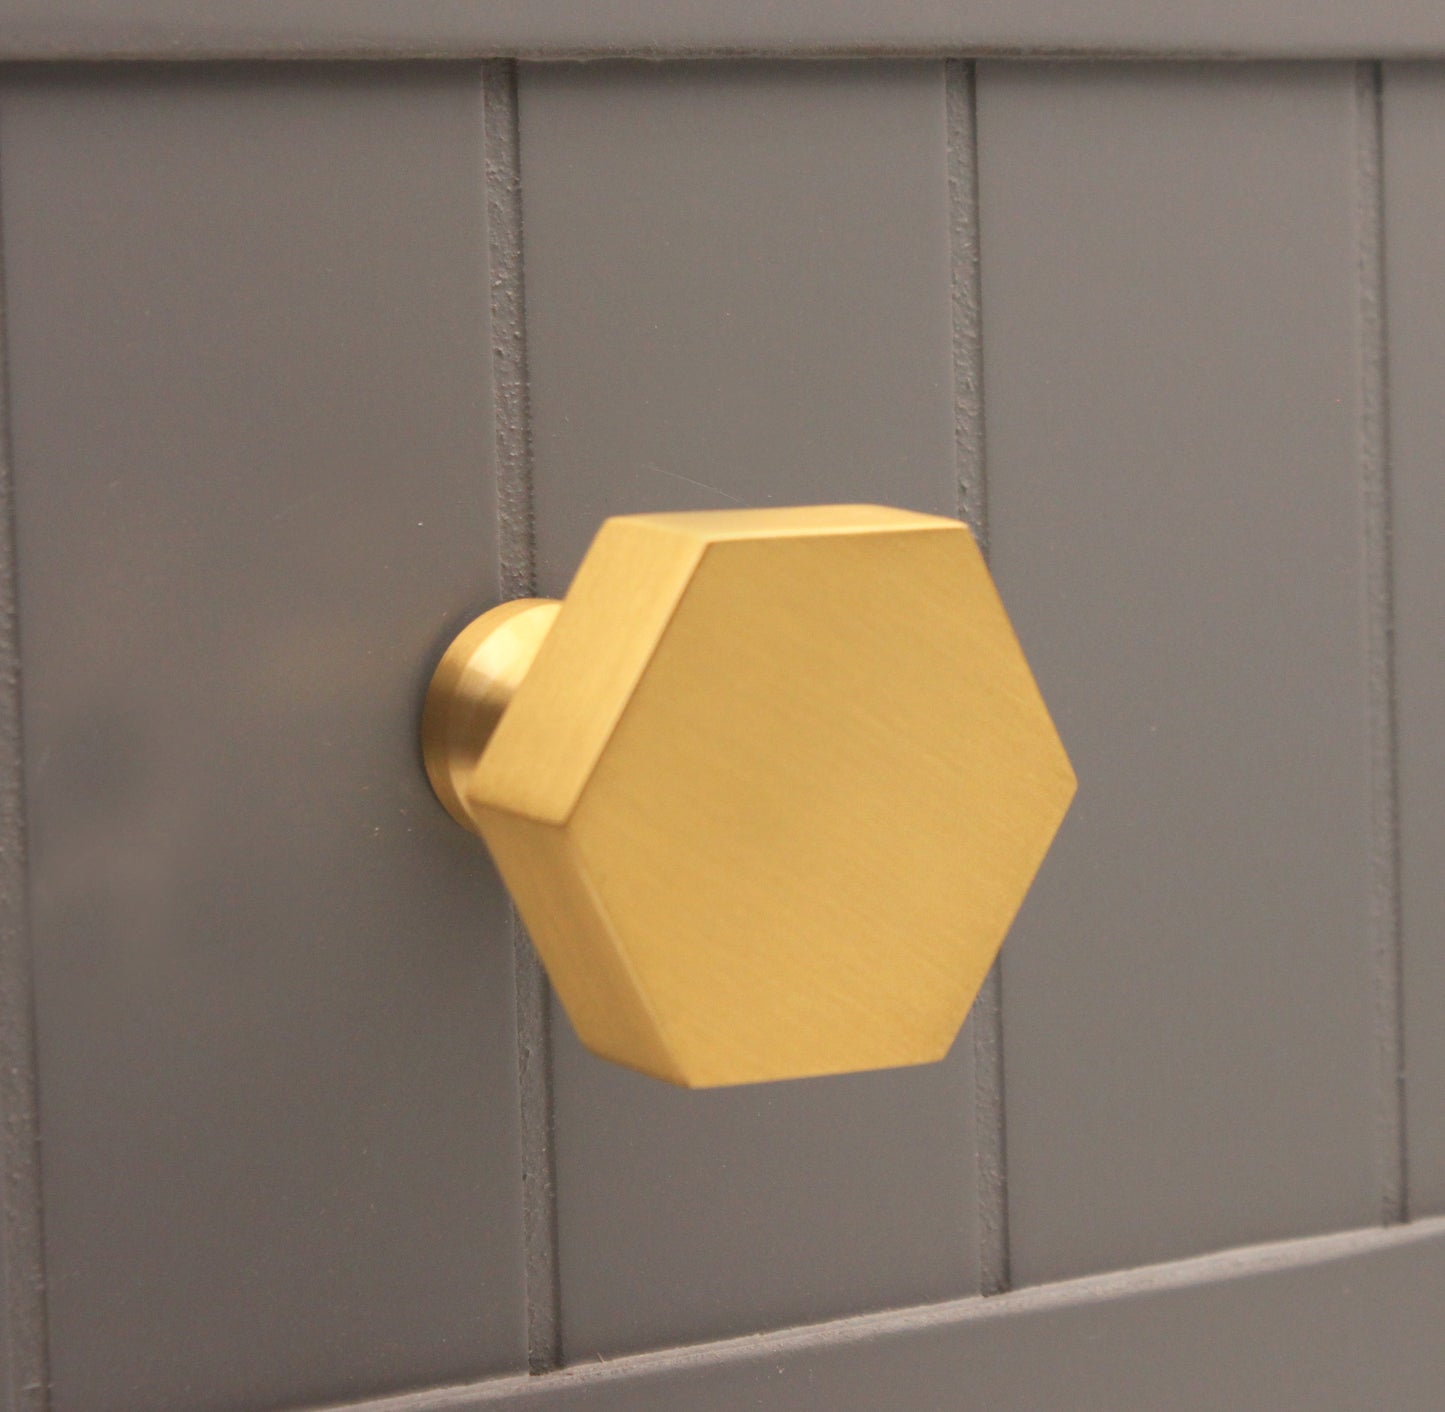 Hexagonal Cupboard Knob Satin Brass